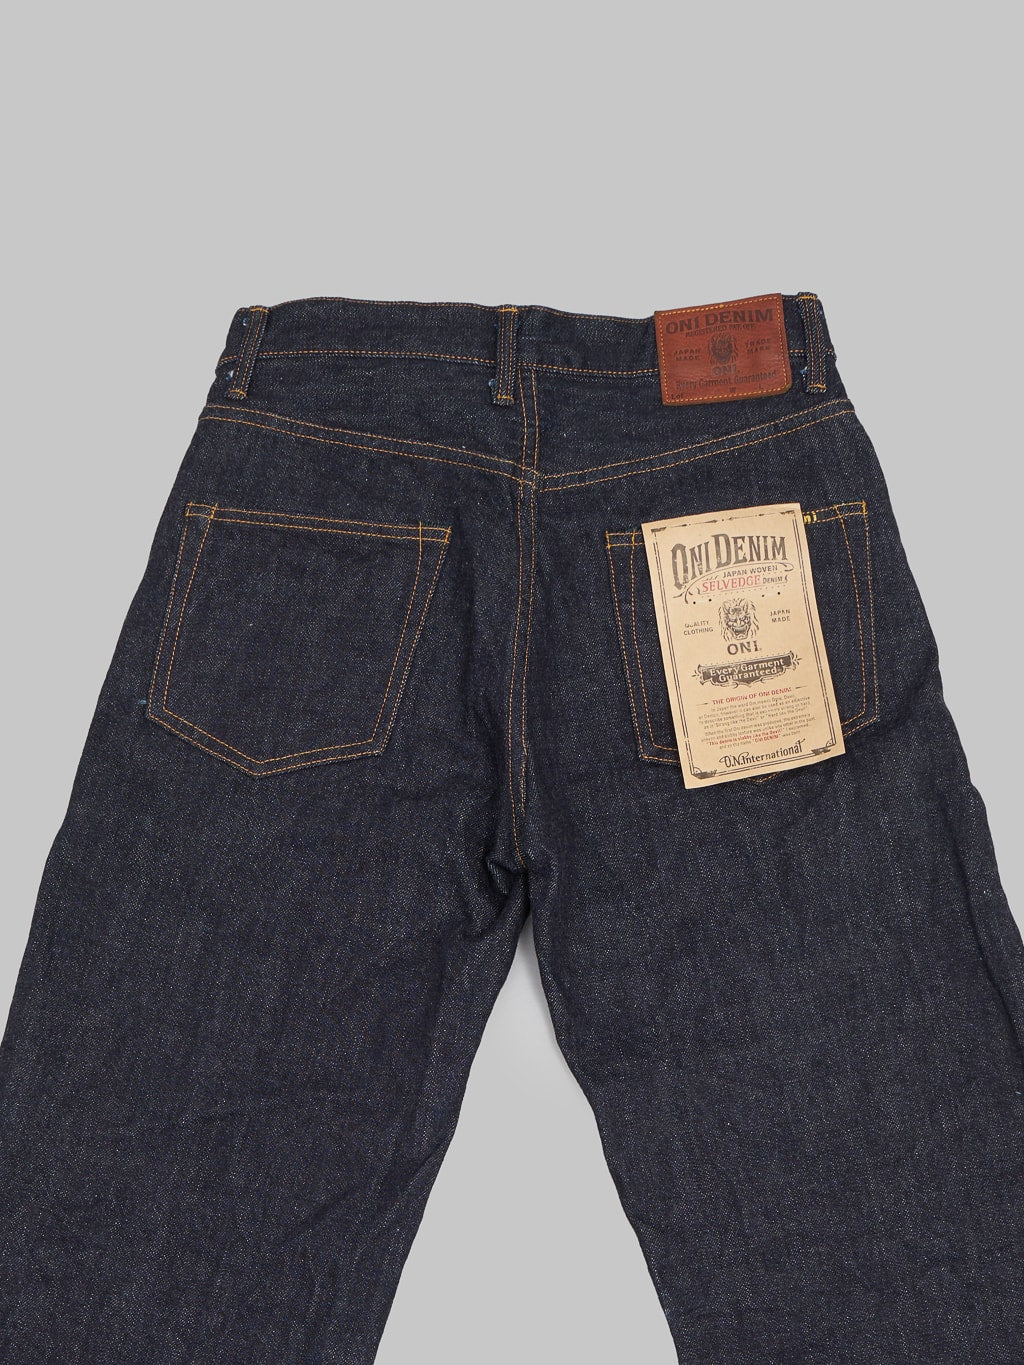 ONI Denim 200 Low Tension 15oz Wide Straight Jeans back details